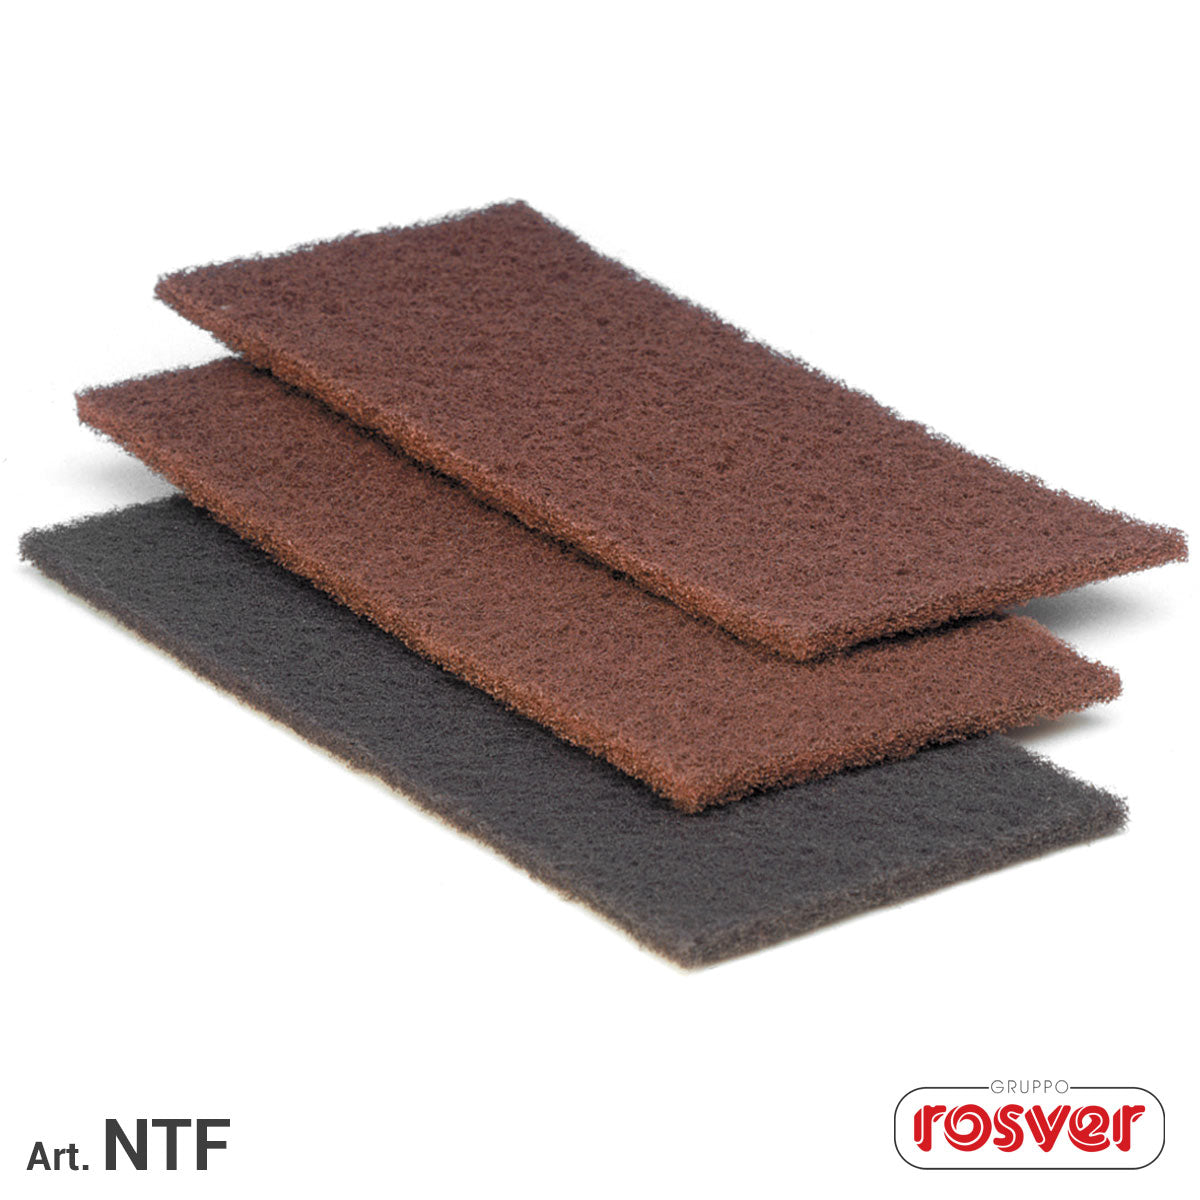 Non-woven sheets - Rosver - NTF mm.150x230 - Conf.10pz